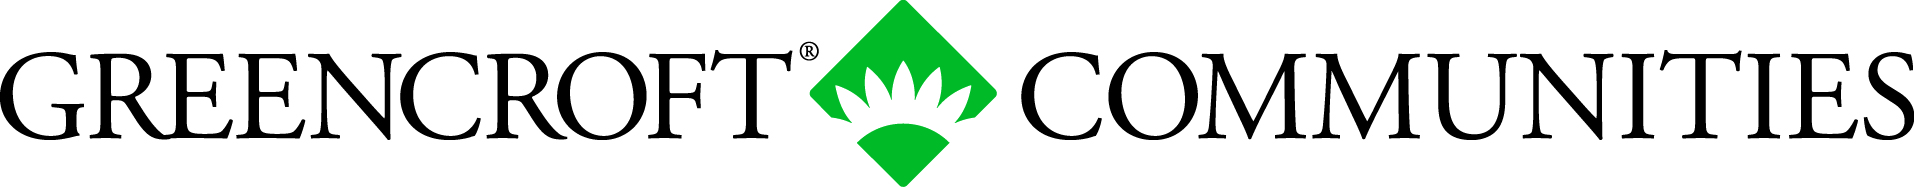 Greencroft Communities Logo